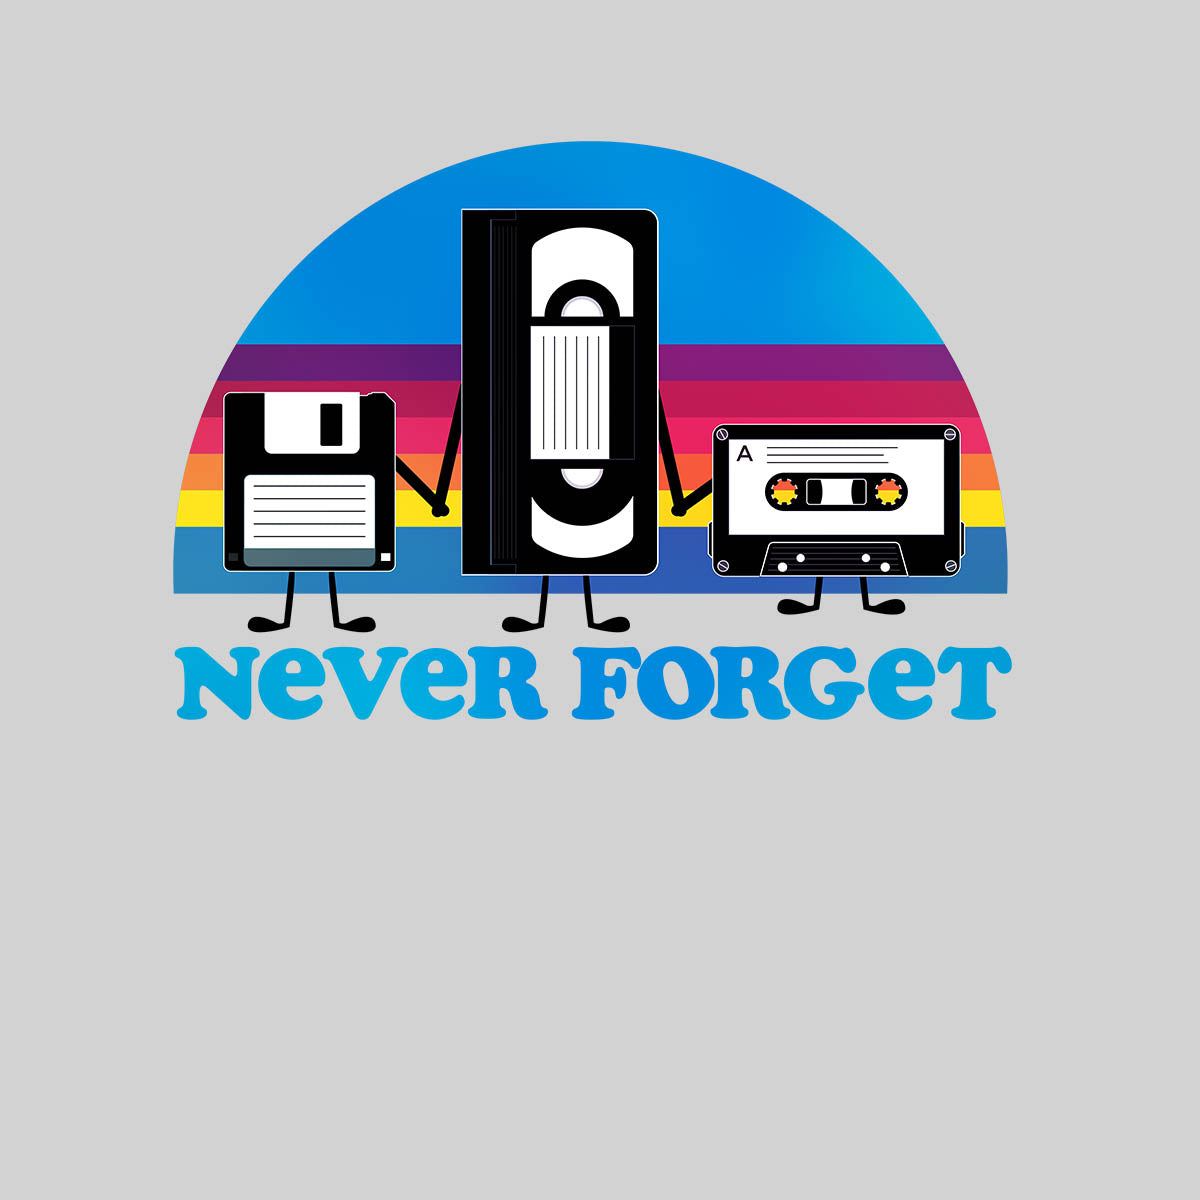 Vintage Never Forget Shirt Funny Retro Floppy Disk Tee T-Shirt Nostalgia t-shirt 8-bit Gaming Unisex T-Shirts